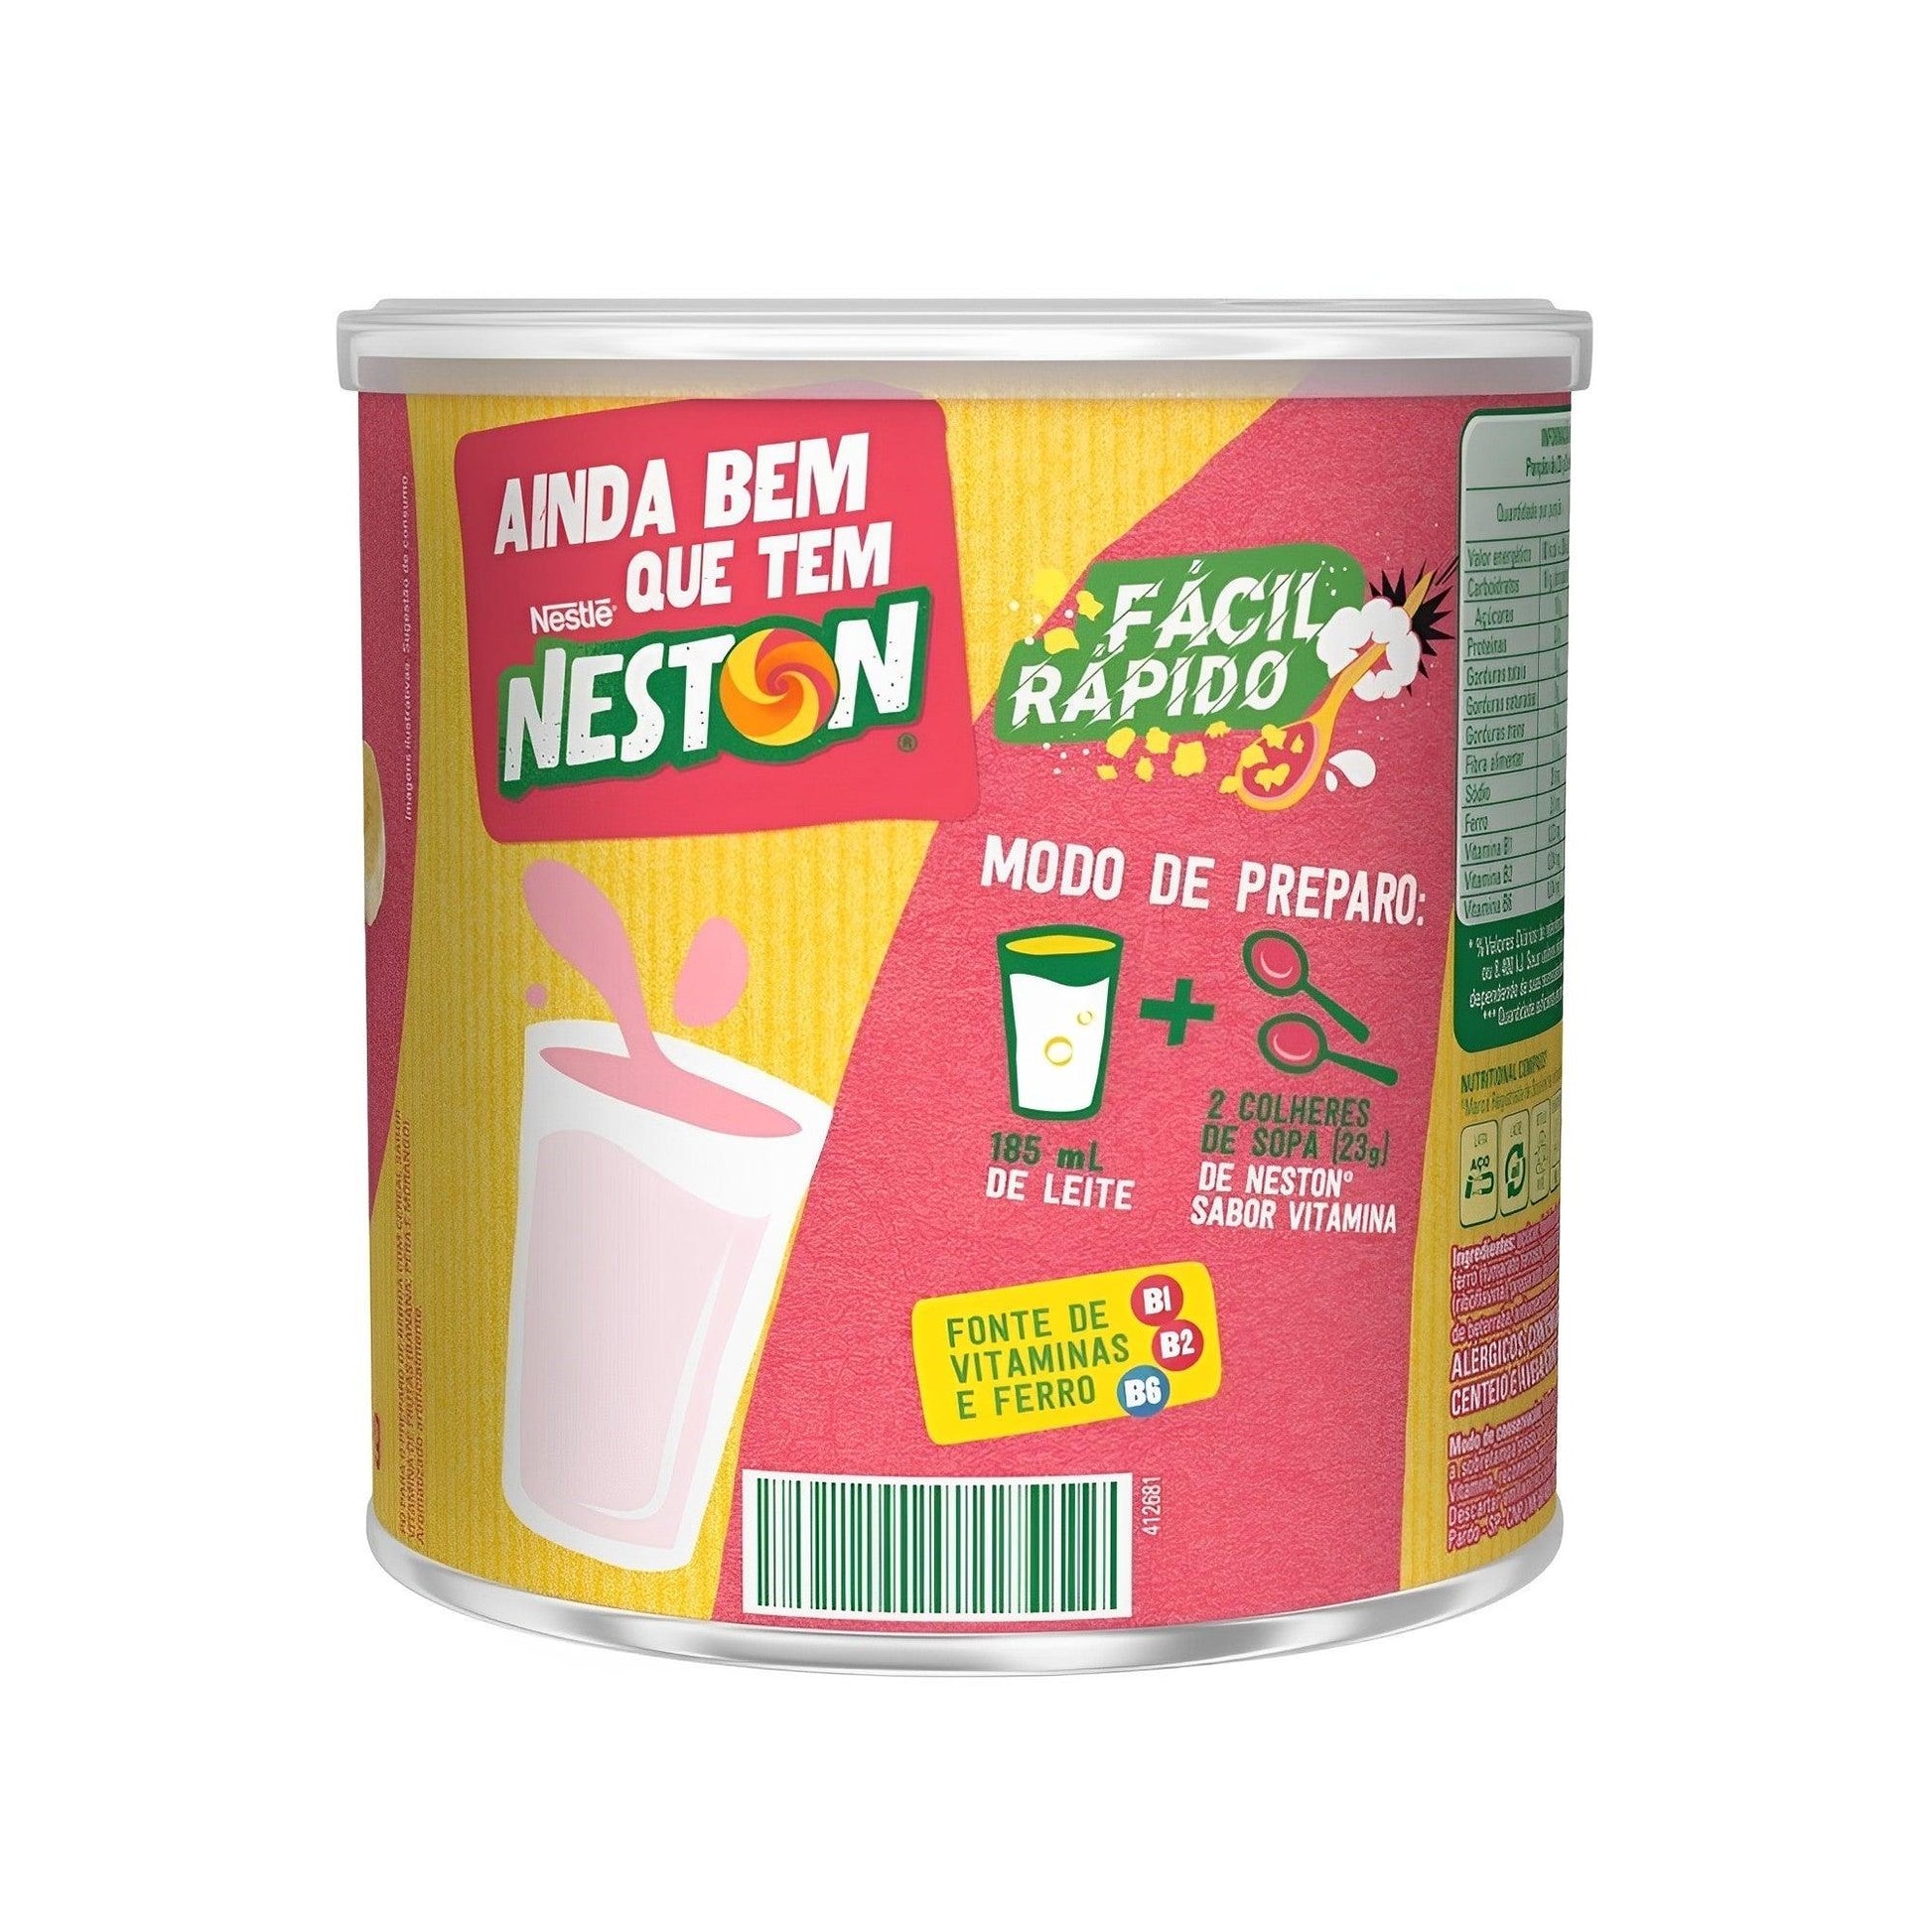 Nestlé Neston Vitamin Pear, Strawberry & Banana 14.10 oz. (Pack of 2) - Brazilian Shop